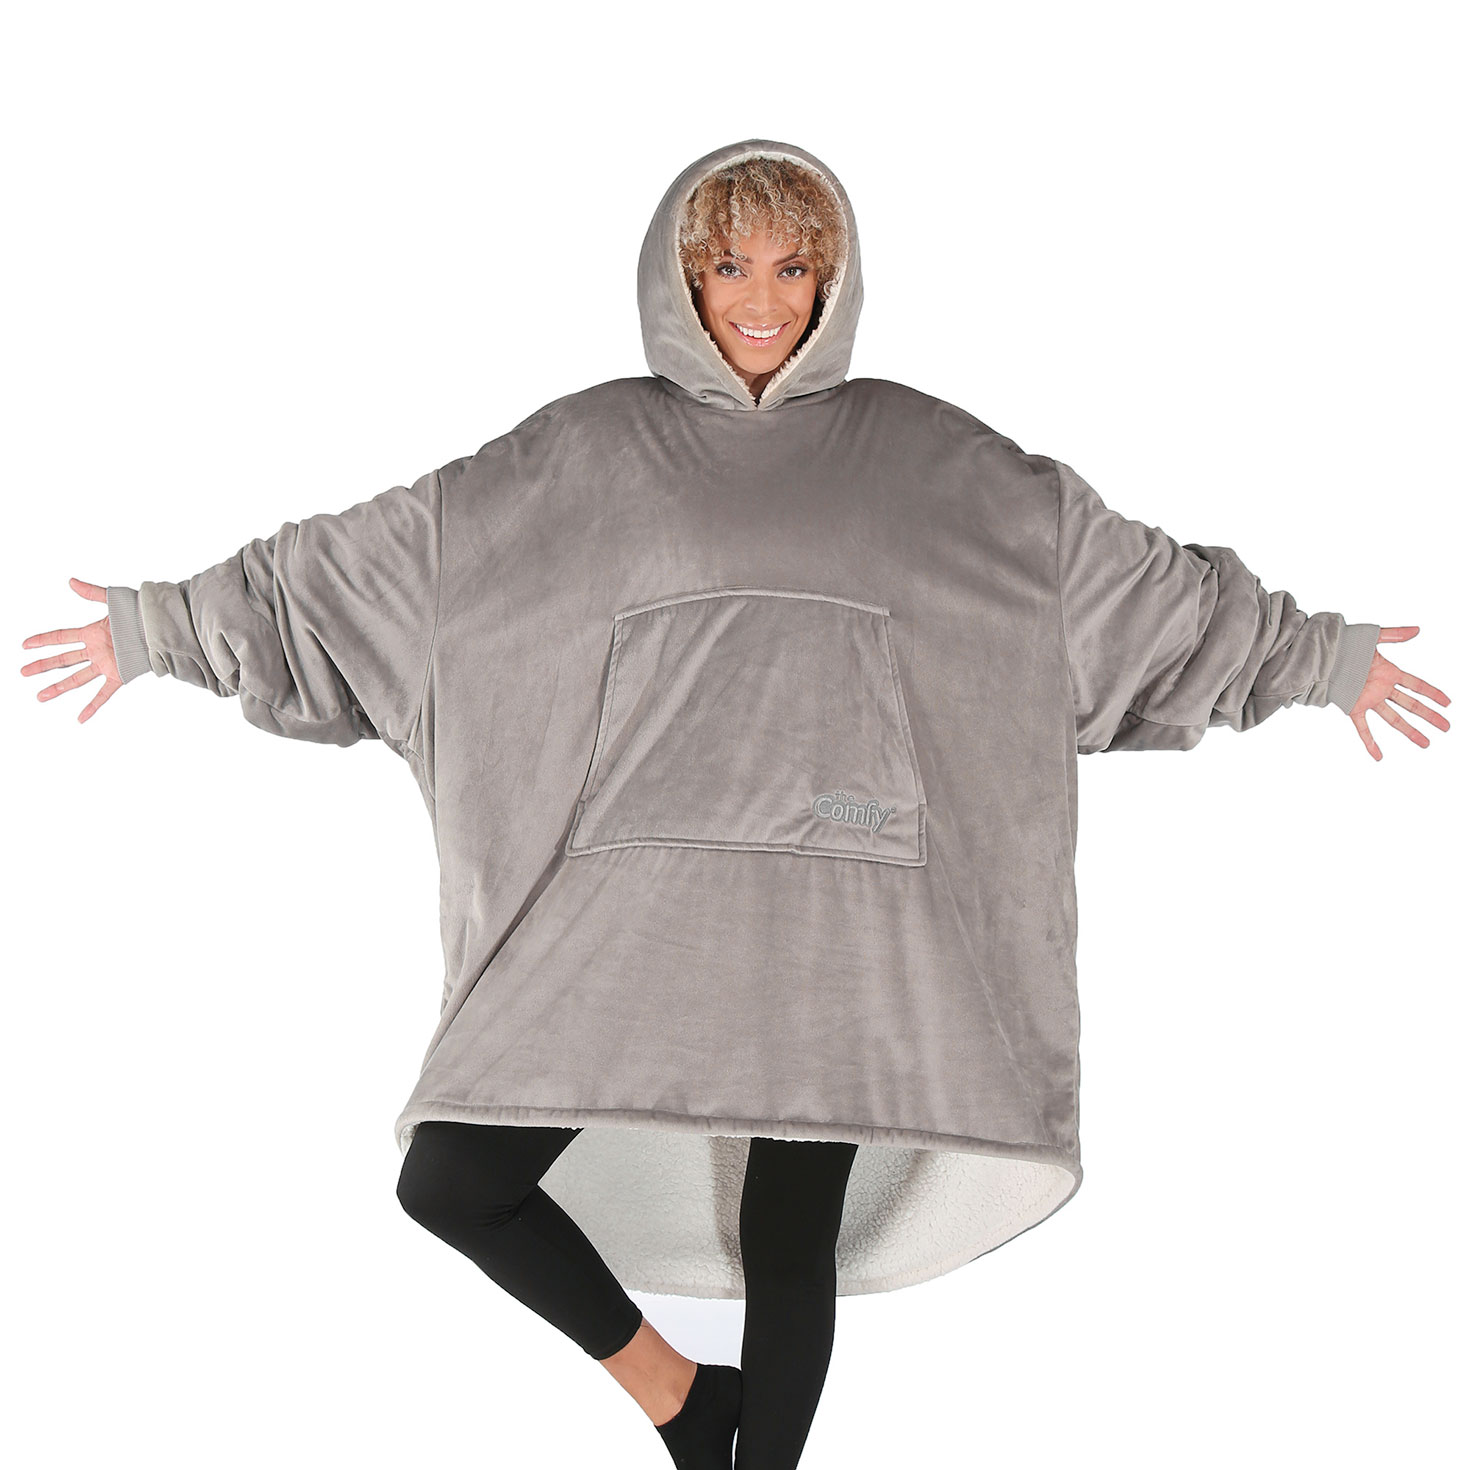 The Comfy Original Wearable Blanket in Gray - Loungewear